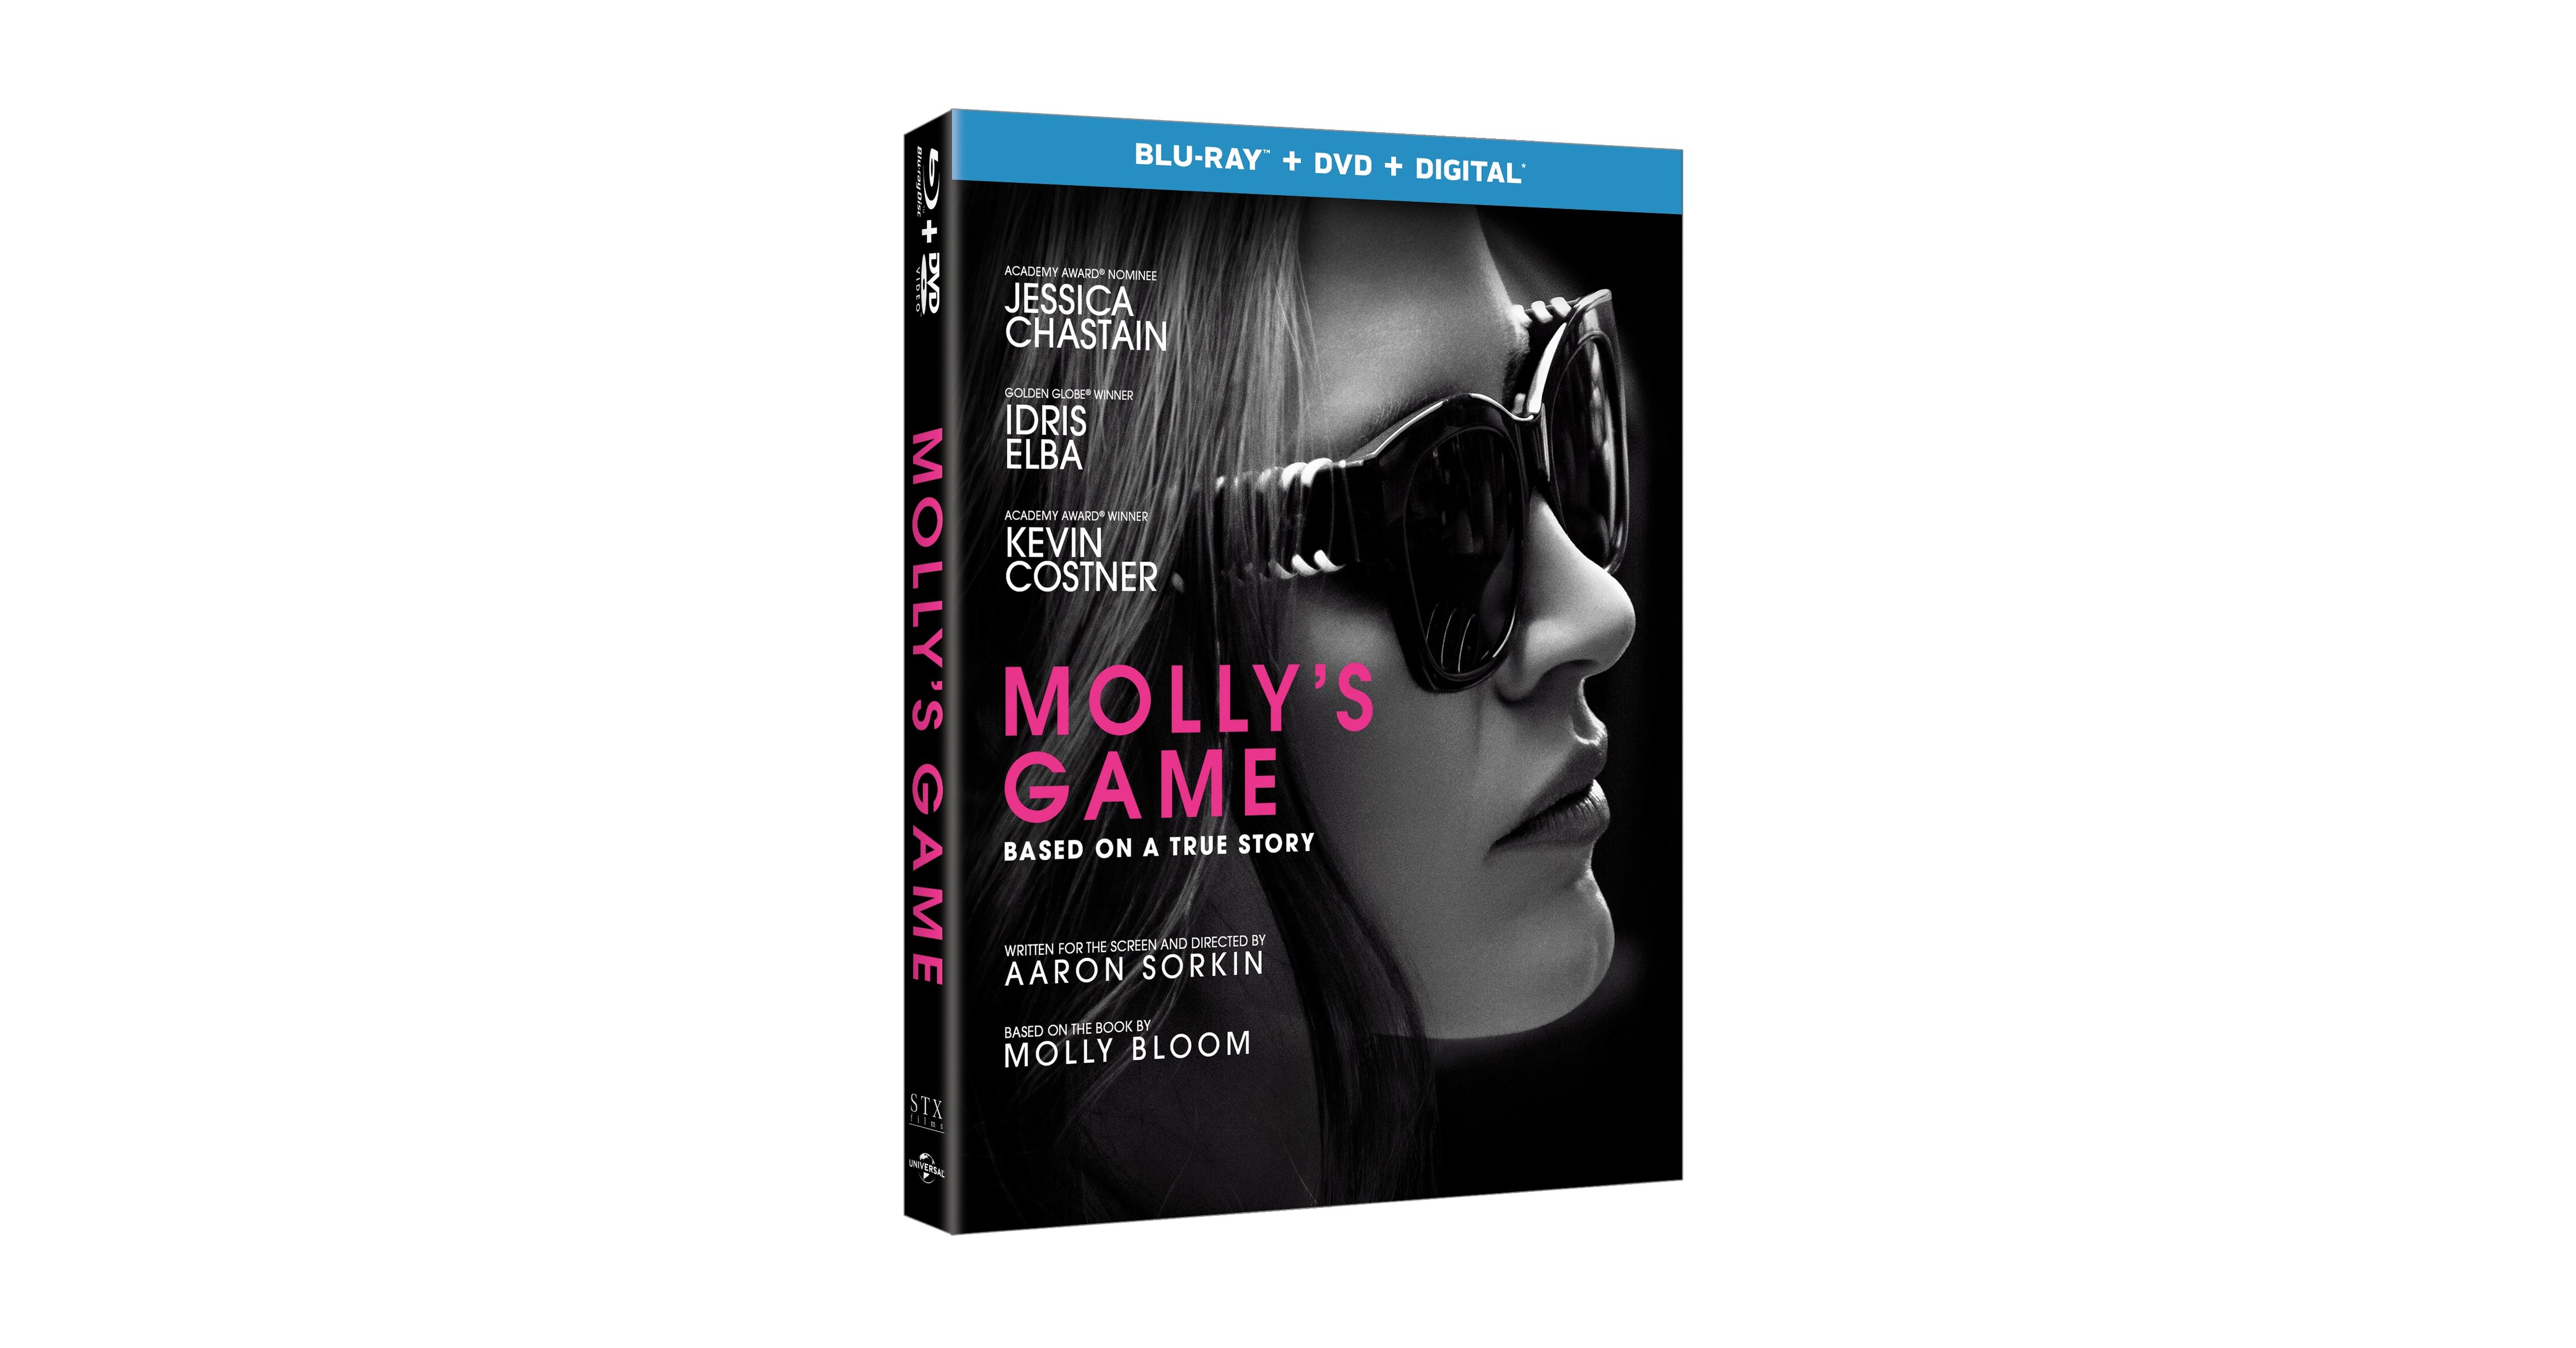  Molly's Game [Blu-ray] : Jessica Chastain, Idris Elba